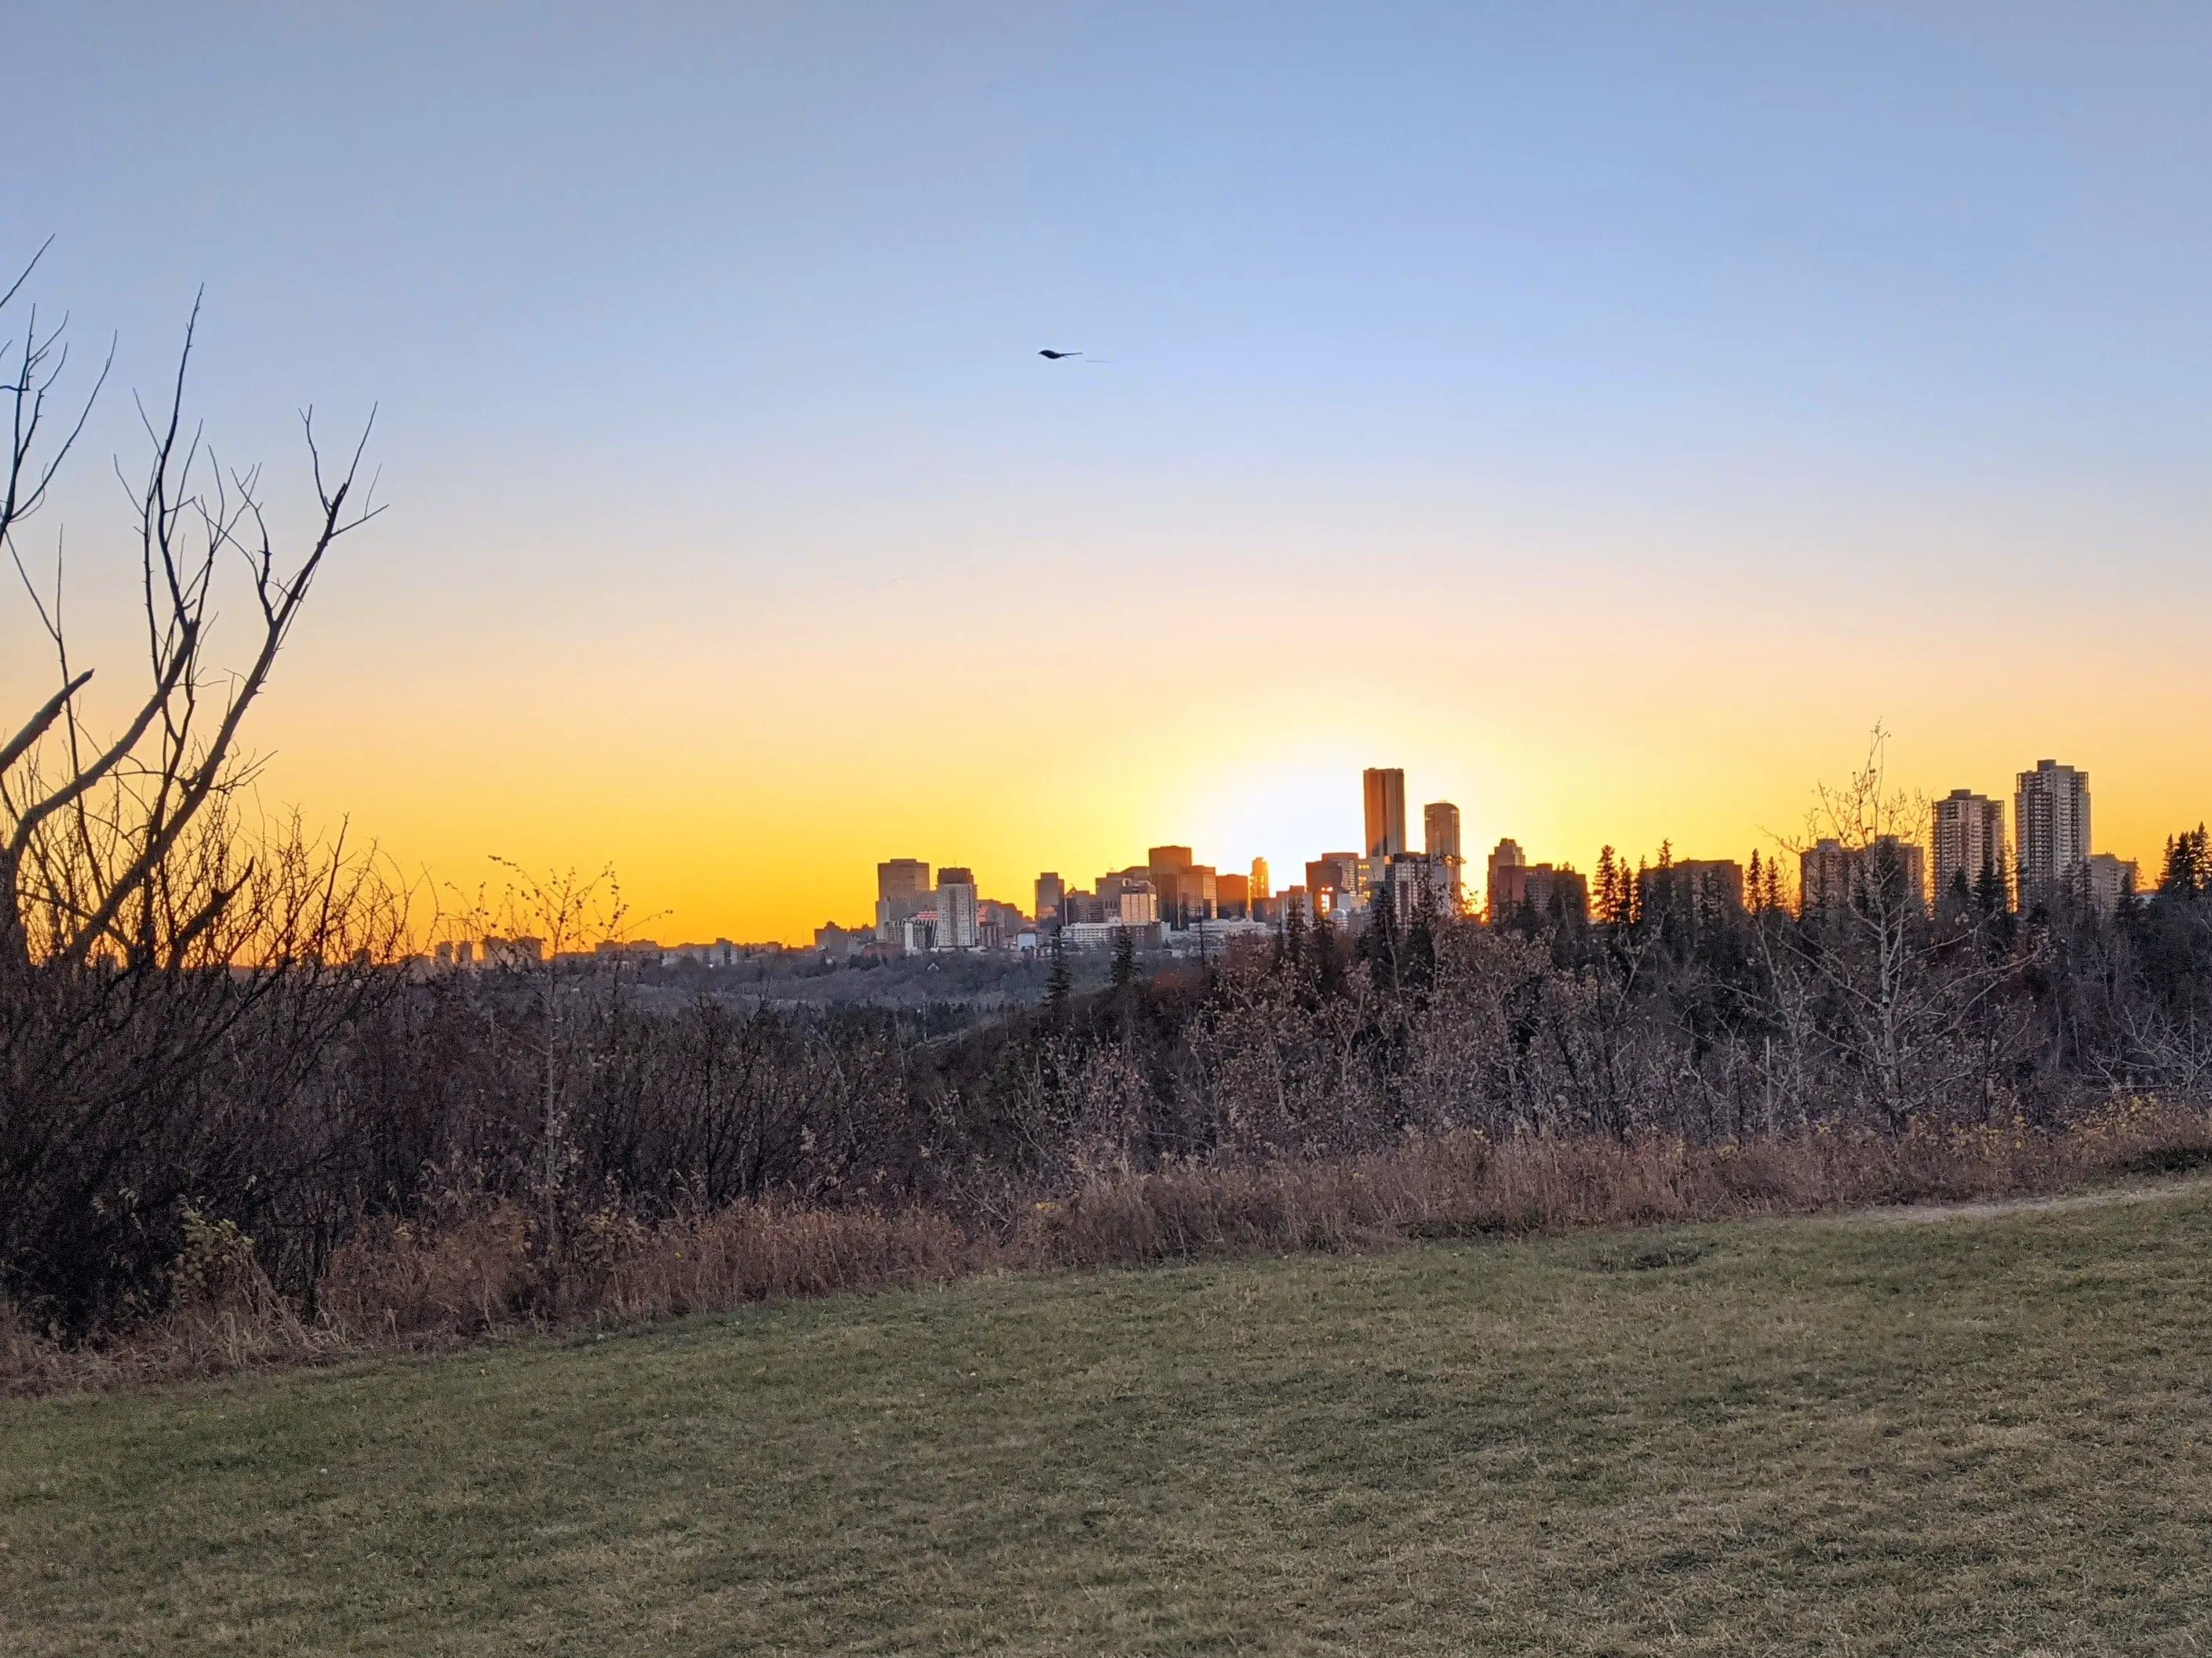 Panoramic view Edmonton (Vue panoramique Edmonton)